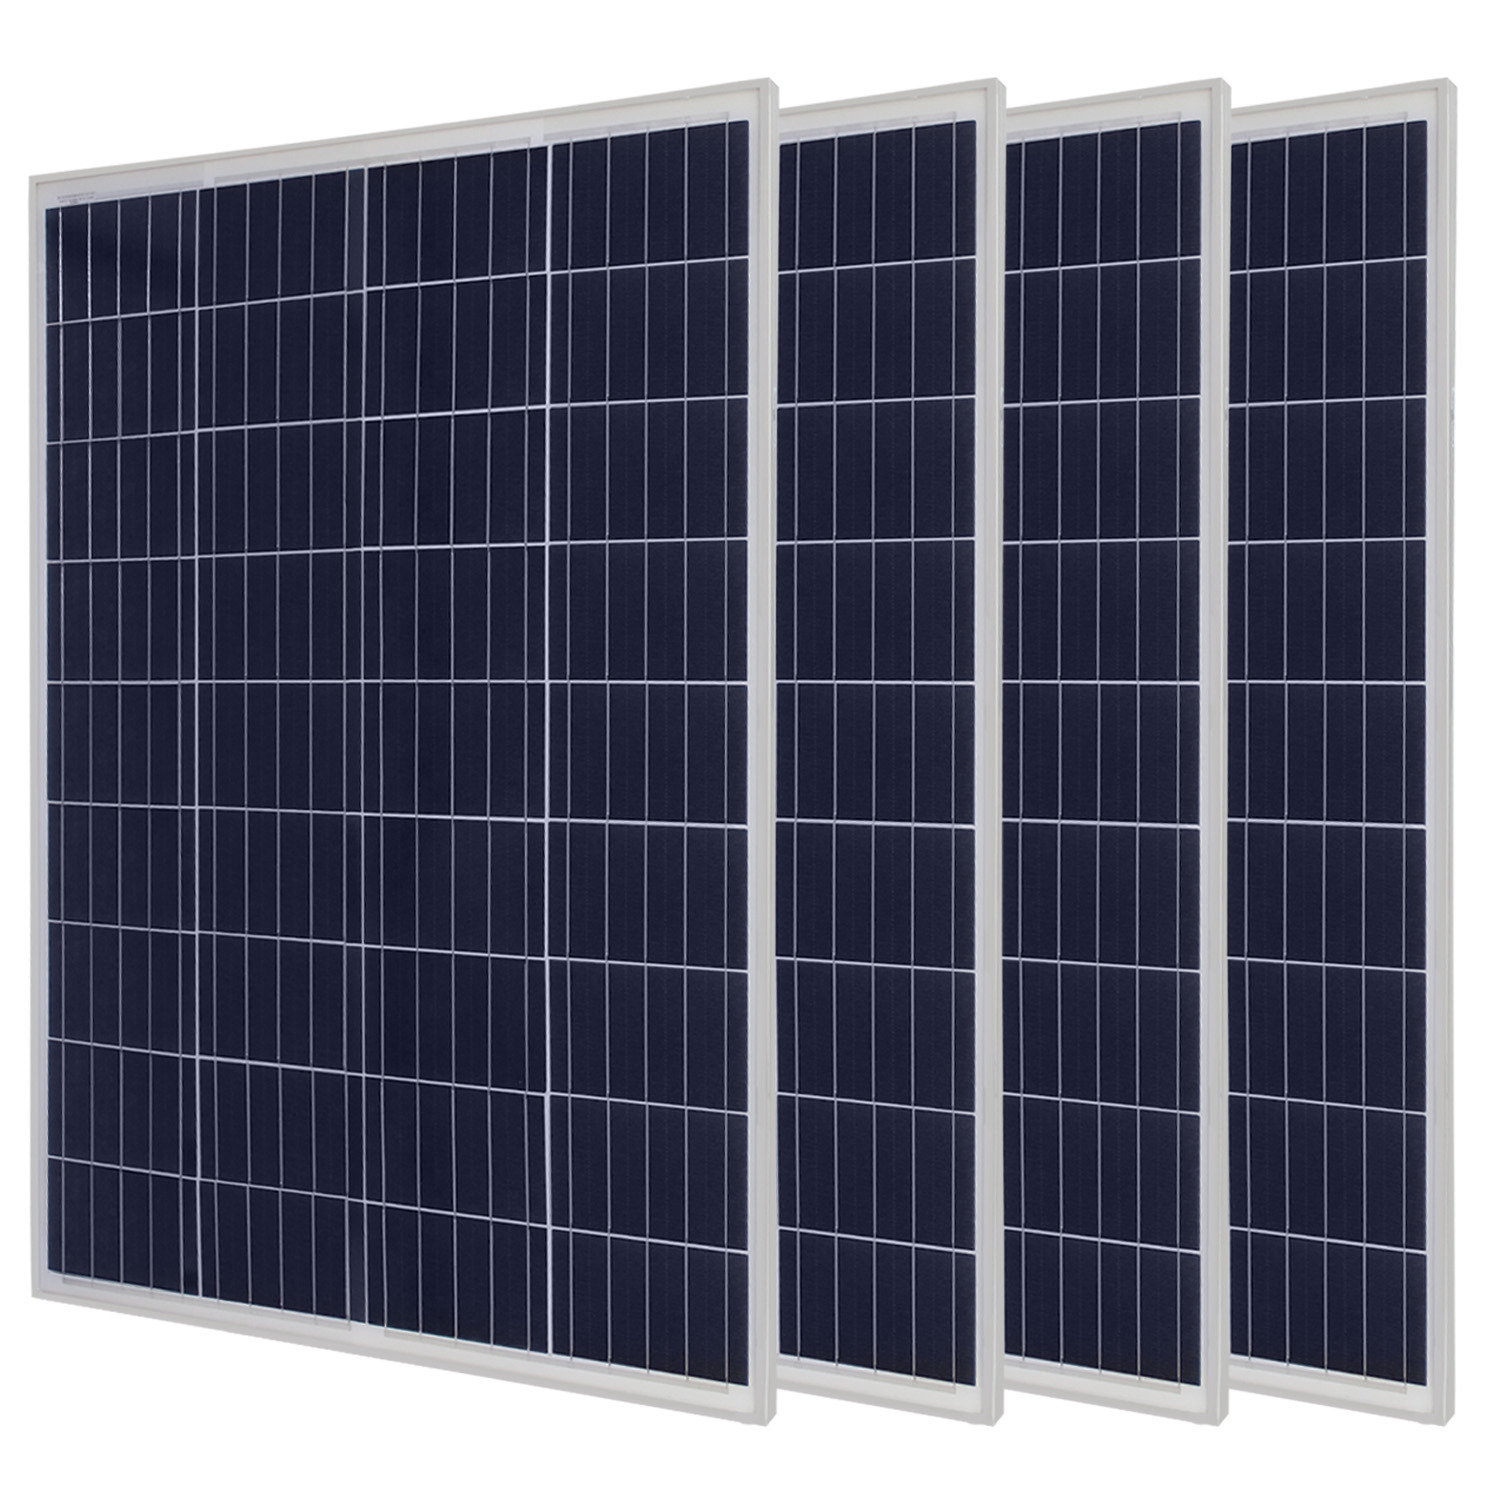 100Watt Solar Panel 12V Poly Battery Charger for Car, Homes - 4 Pack